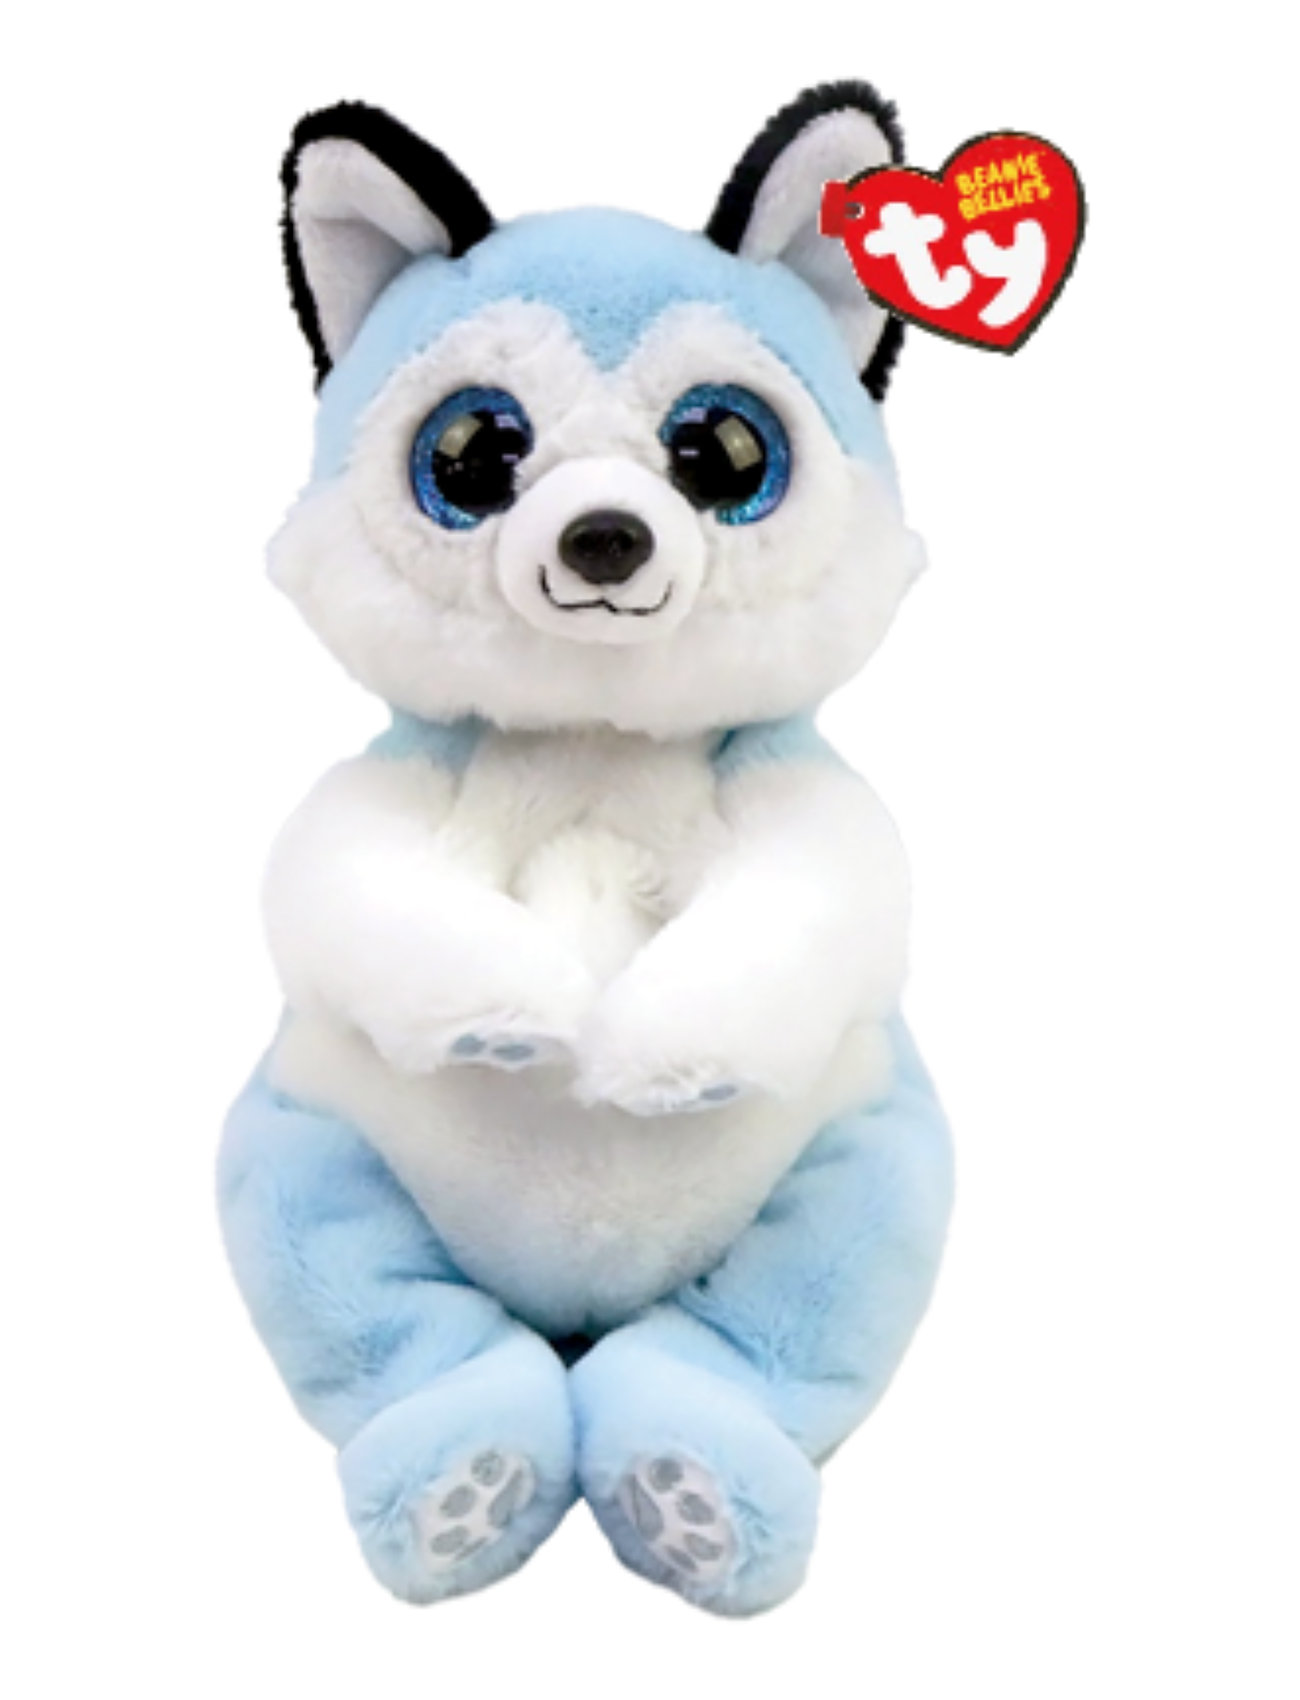 Thunder - Blue Husky Reg Toys Soft Toys Stuffed Animals Blue TY